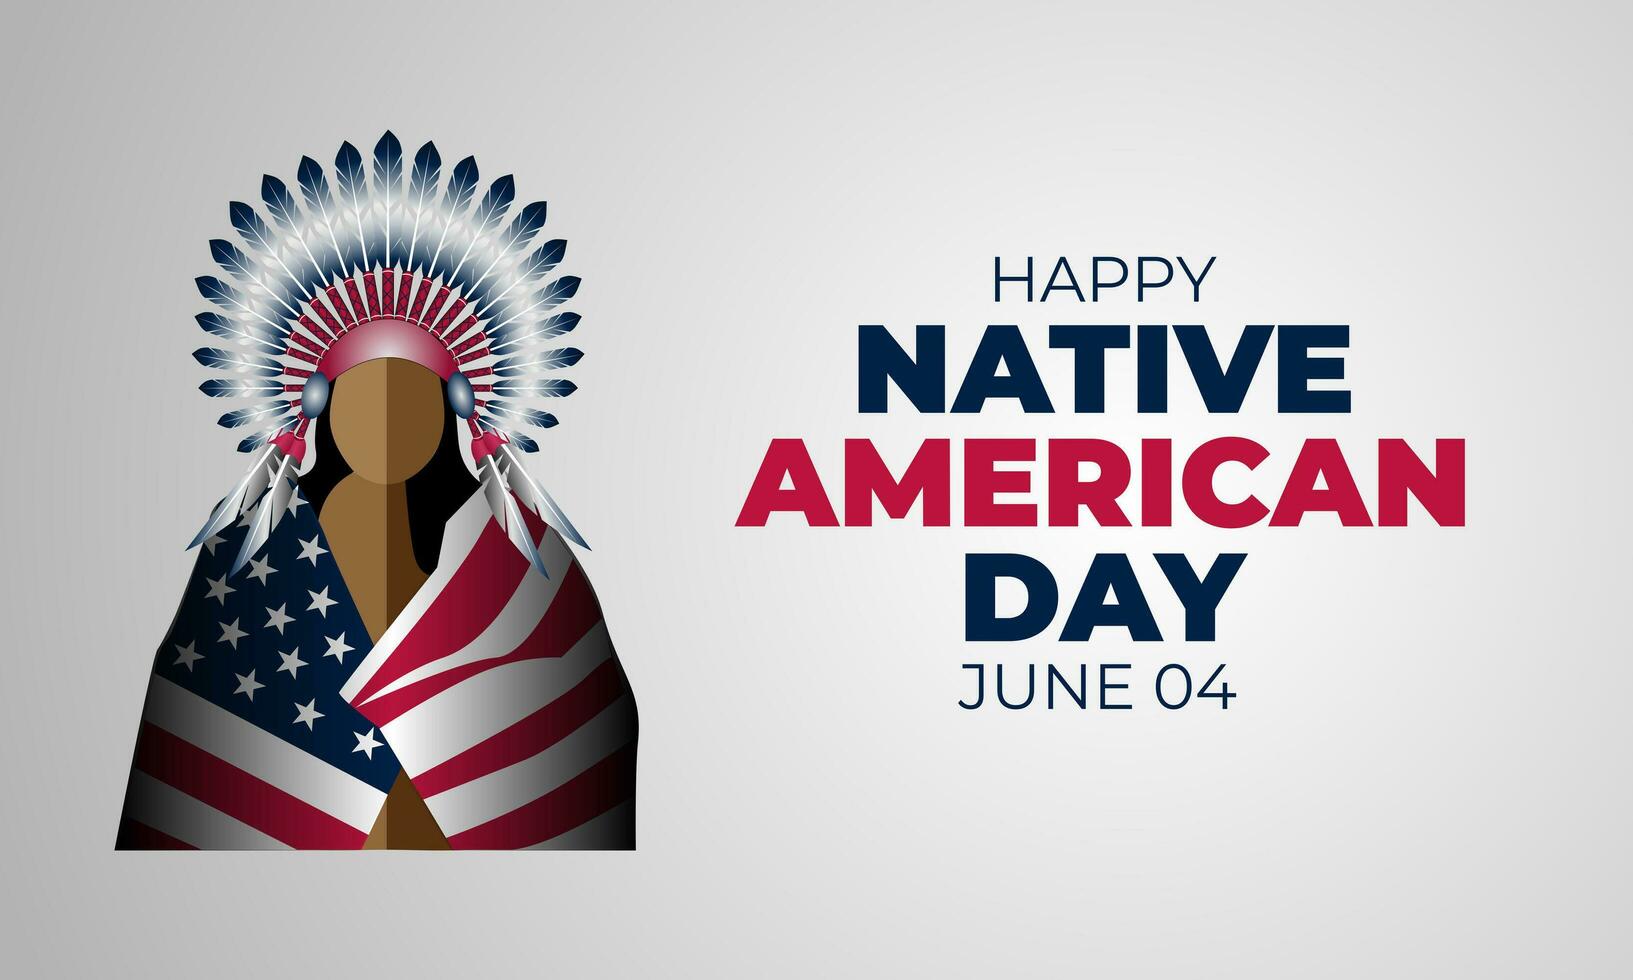 gelukkig inheems Amerikaans dag juni 04 achtergrond vector illustratie